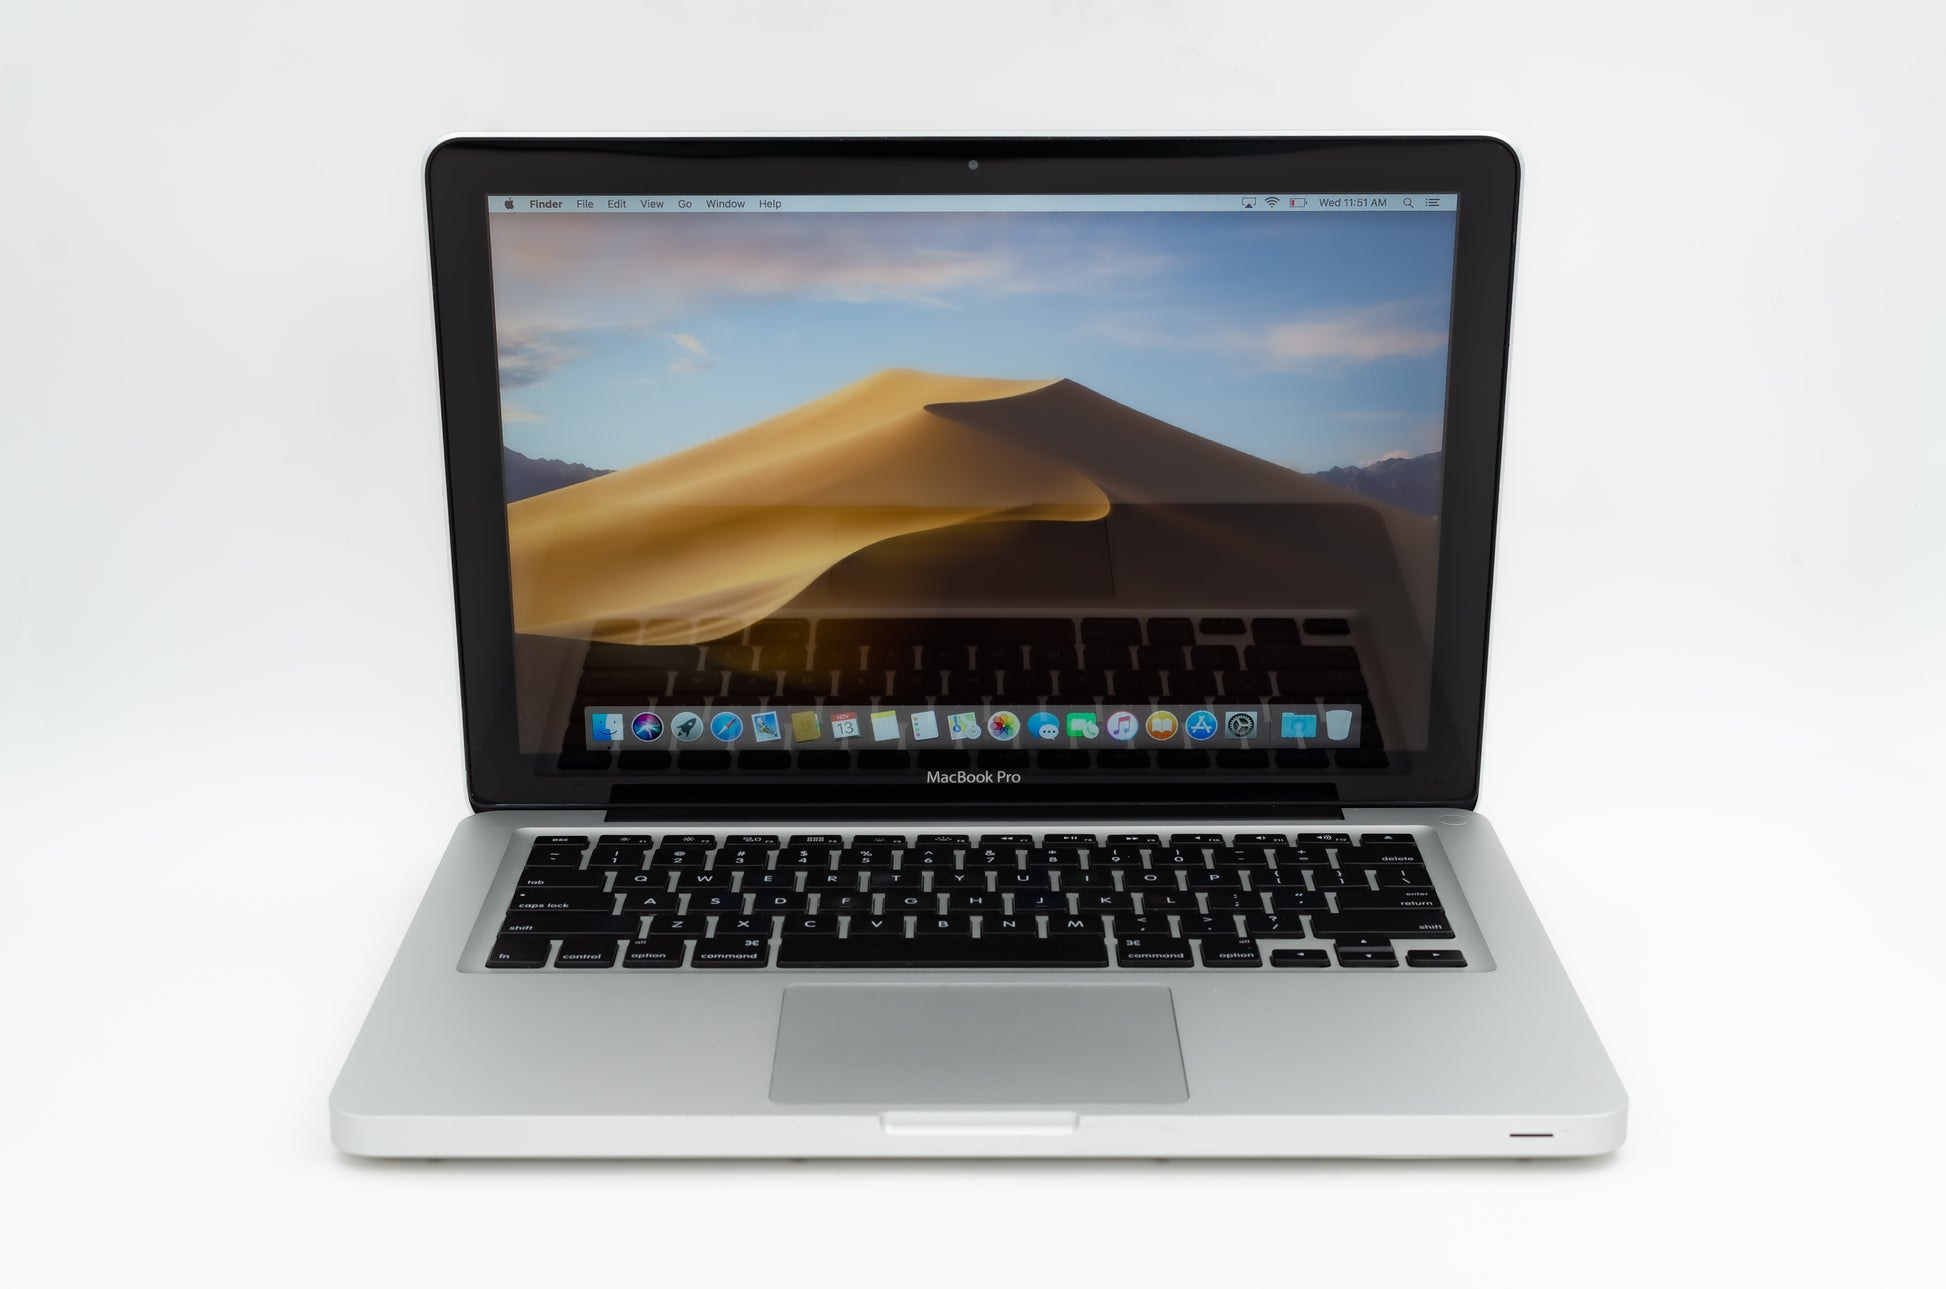 apple-mid-2010-13.3-inch-macbook-pro-a1278-aluminum-c2d - 2.4ghz processor, 4gb ram, 320m - 256mb gpu-mc374ll/a-1